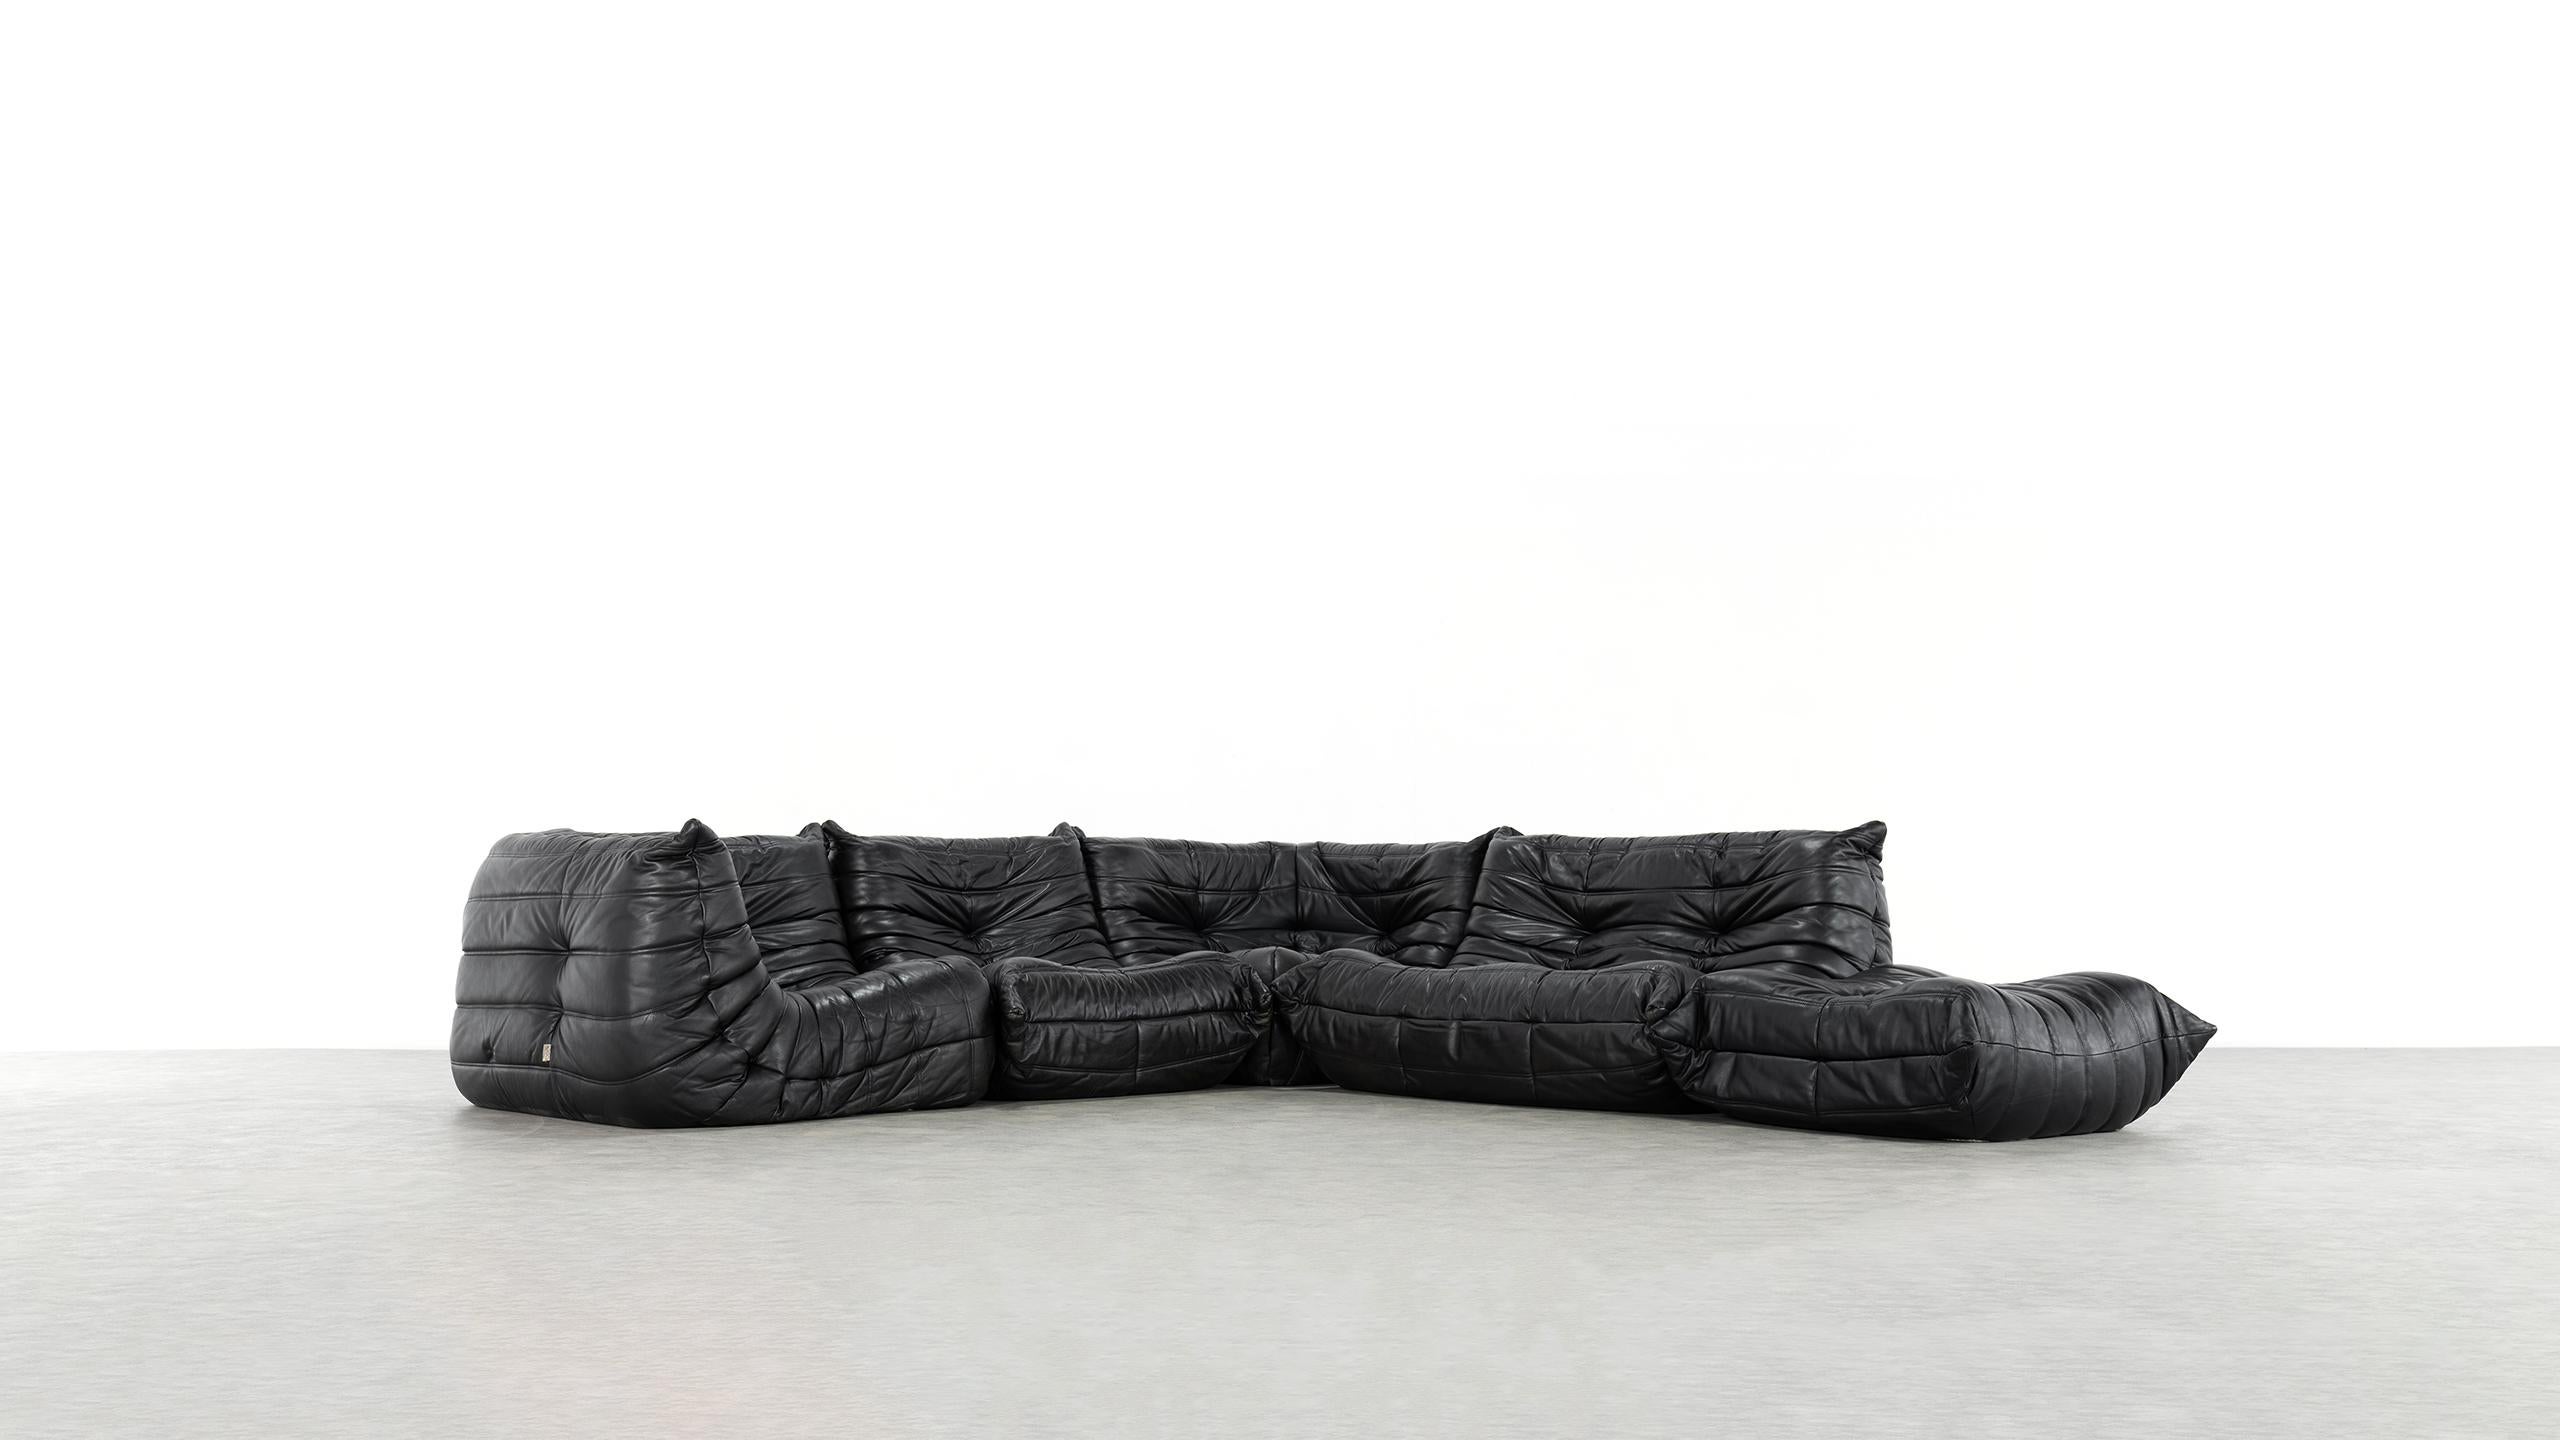 Mid-Century Modern Togo Sofa, 1974 by Michel Ducaroy + Ligne Roset, Giant Landscape, Black Leather